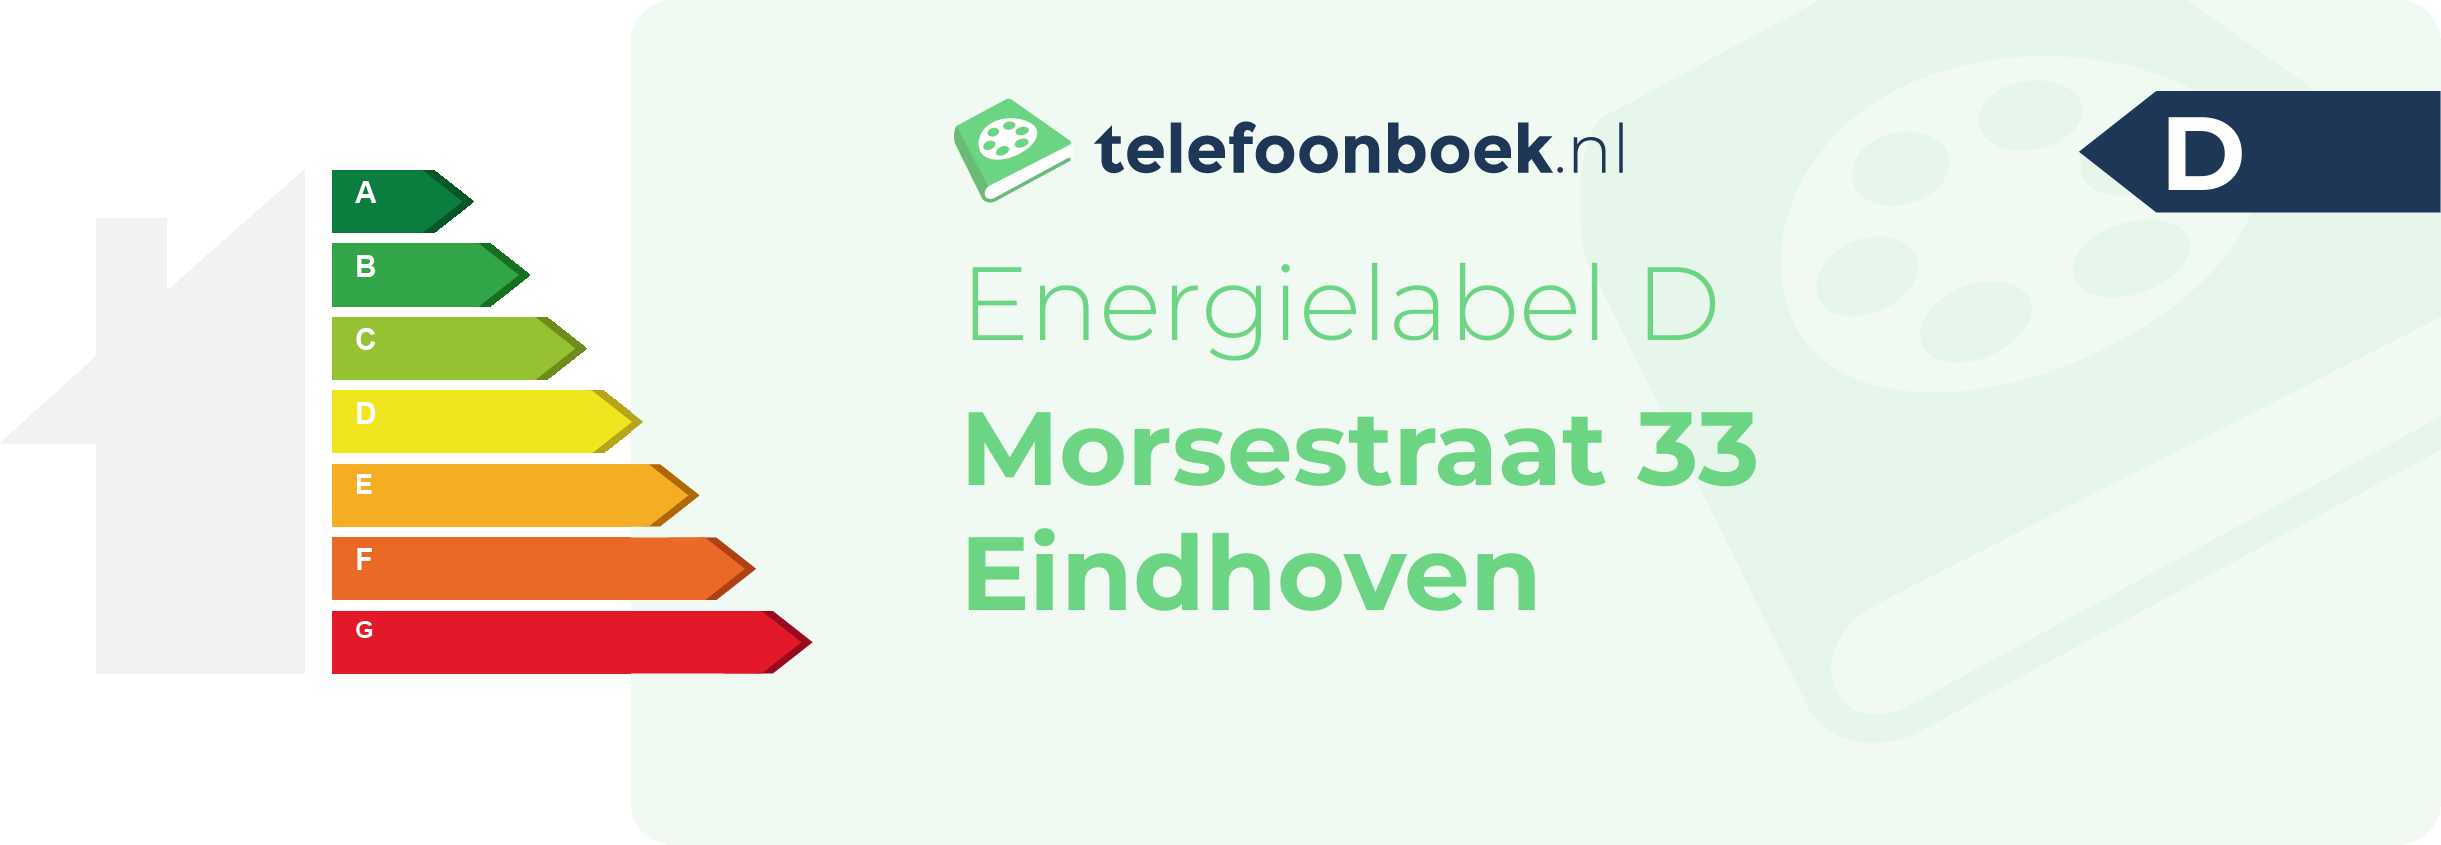 Energielabel Morsestraat 33 Eindhoven